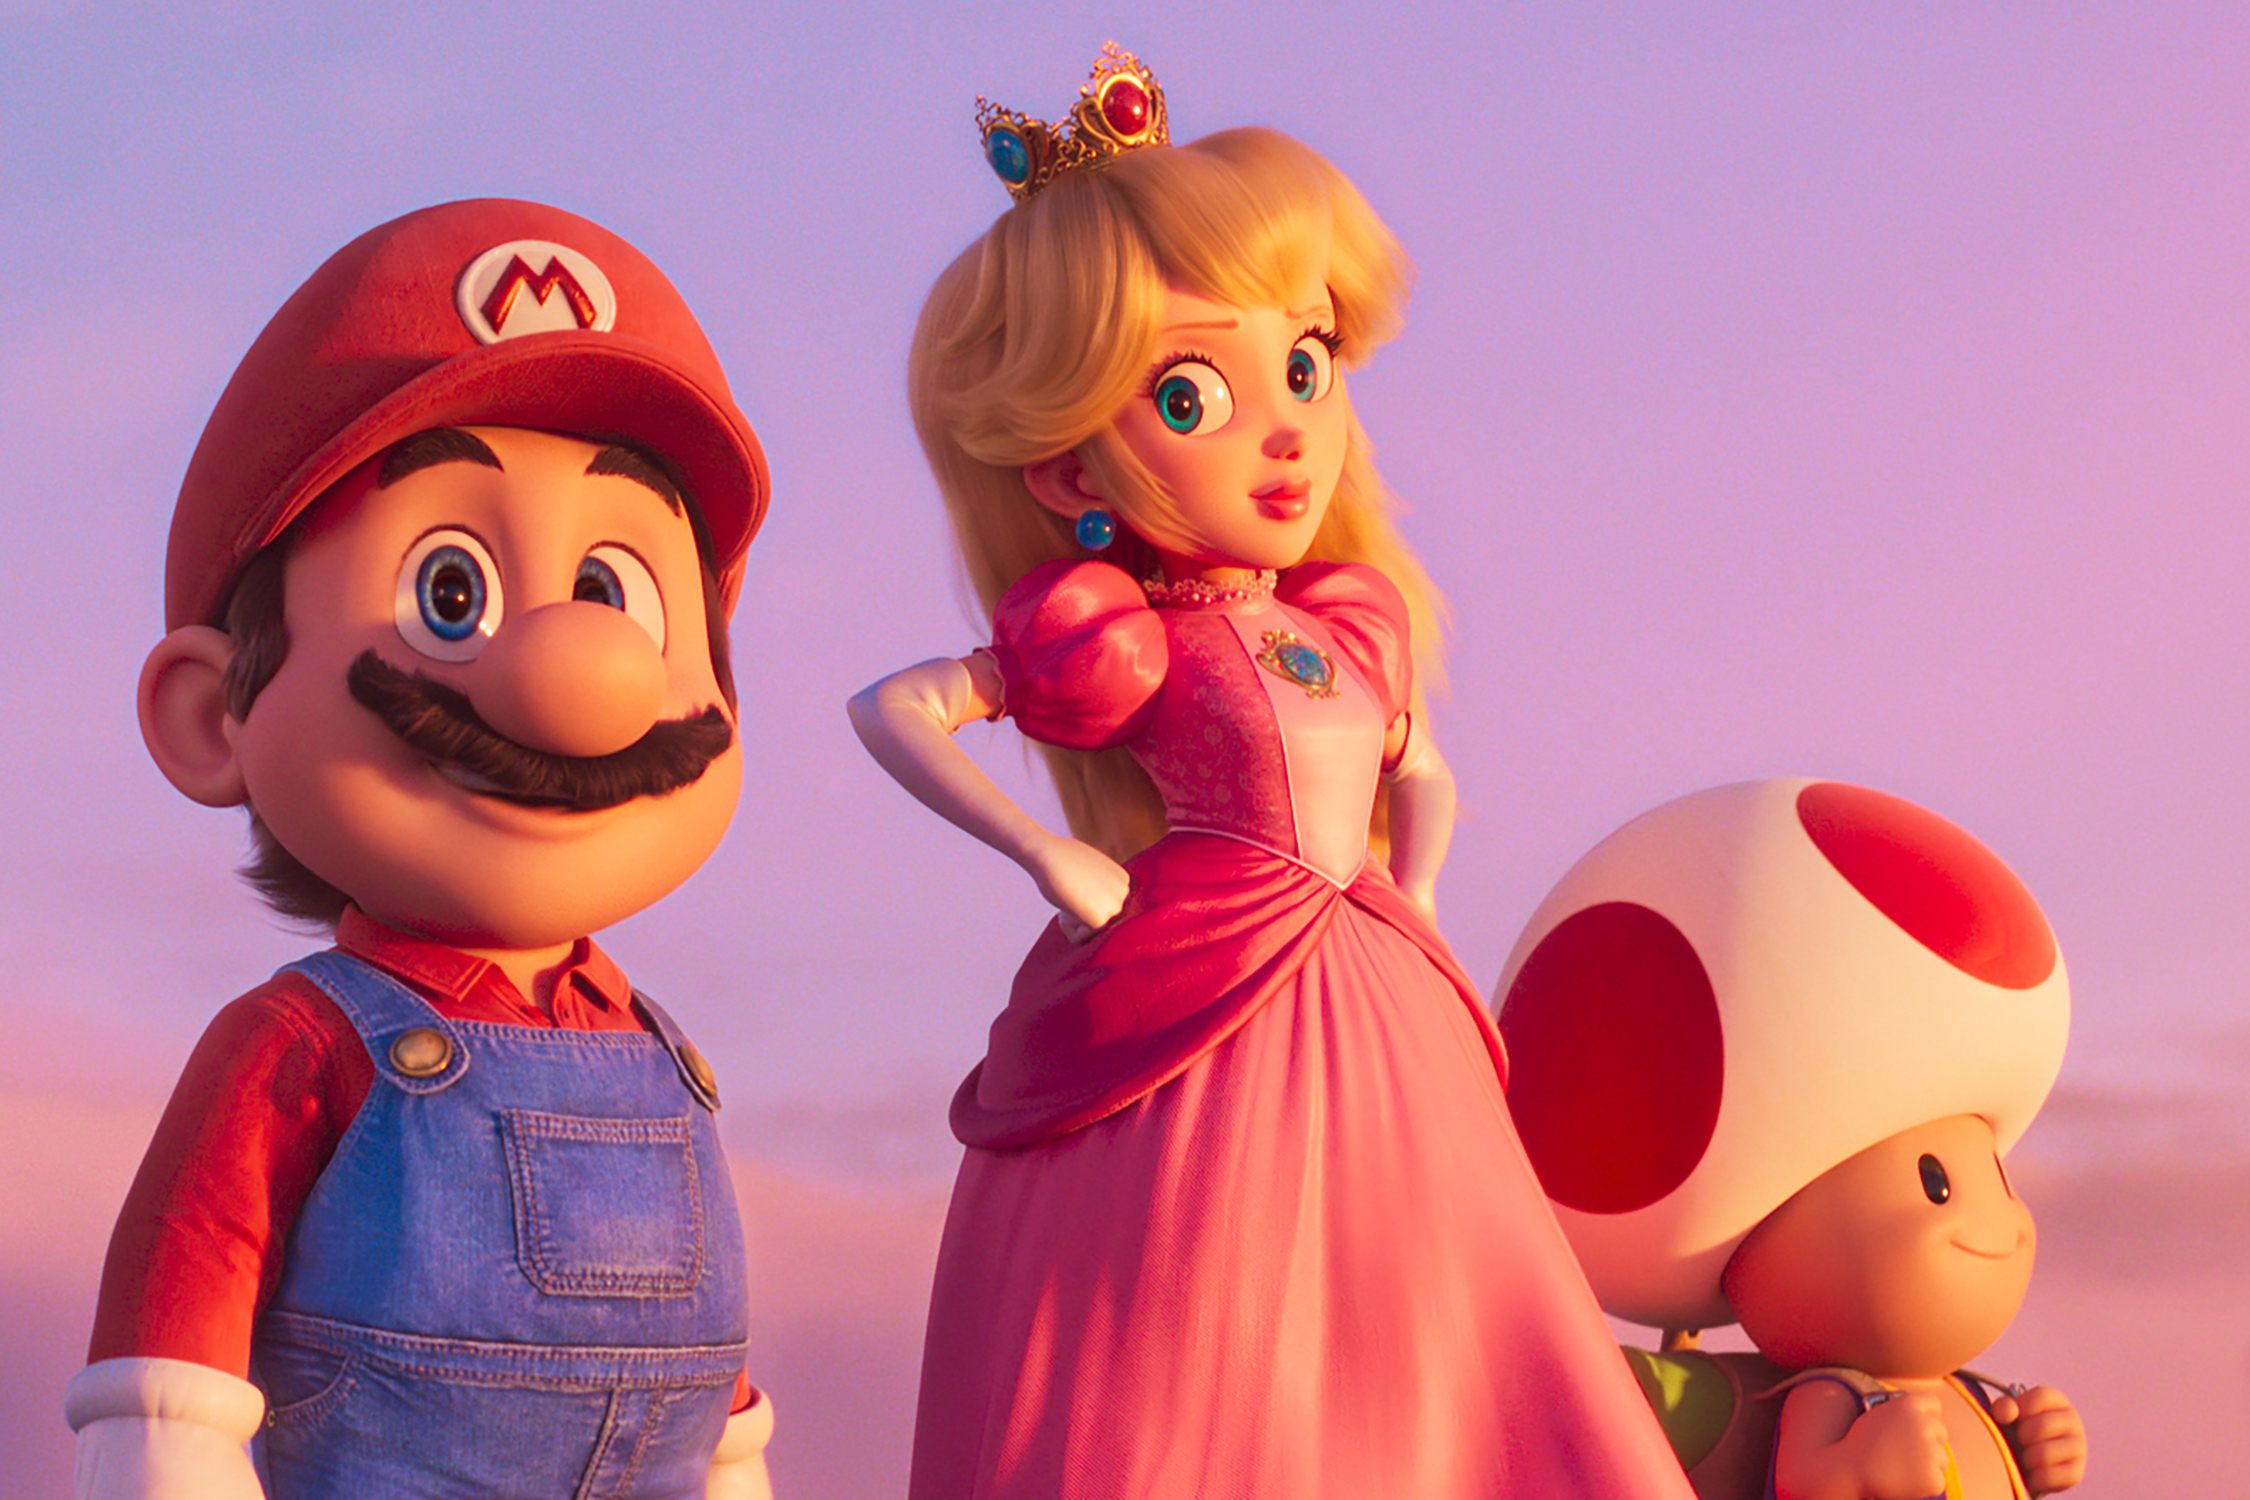 Super Mario Bros.: The movie's credits scene sets up a sequel - Vox